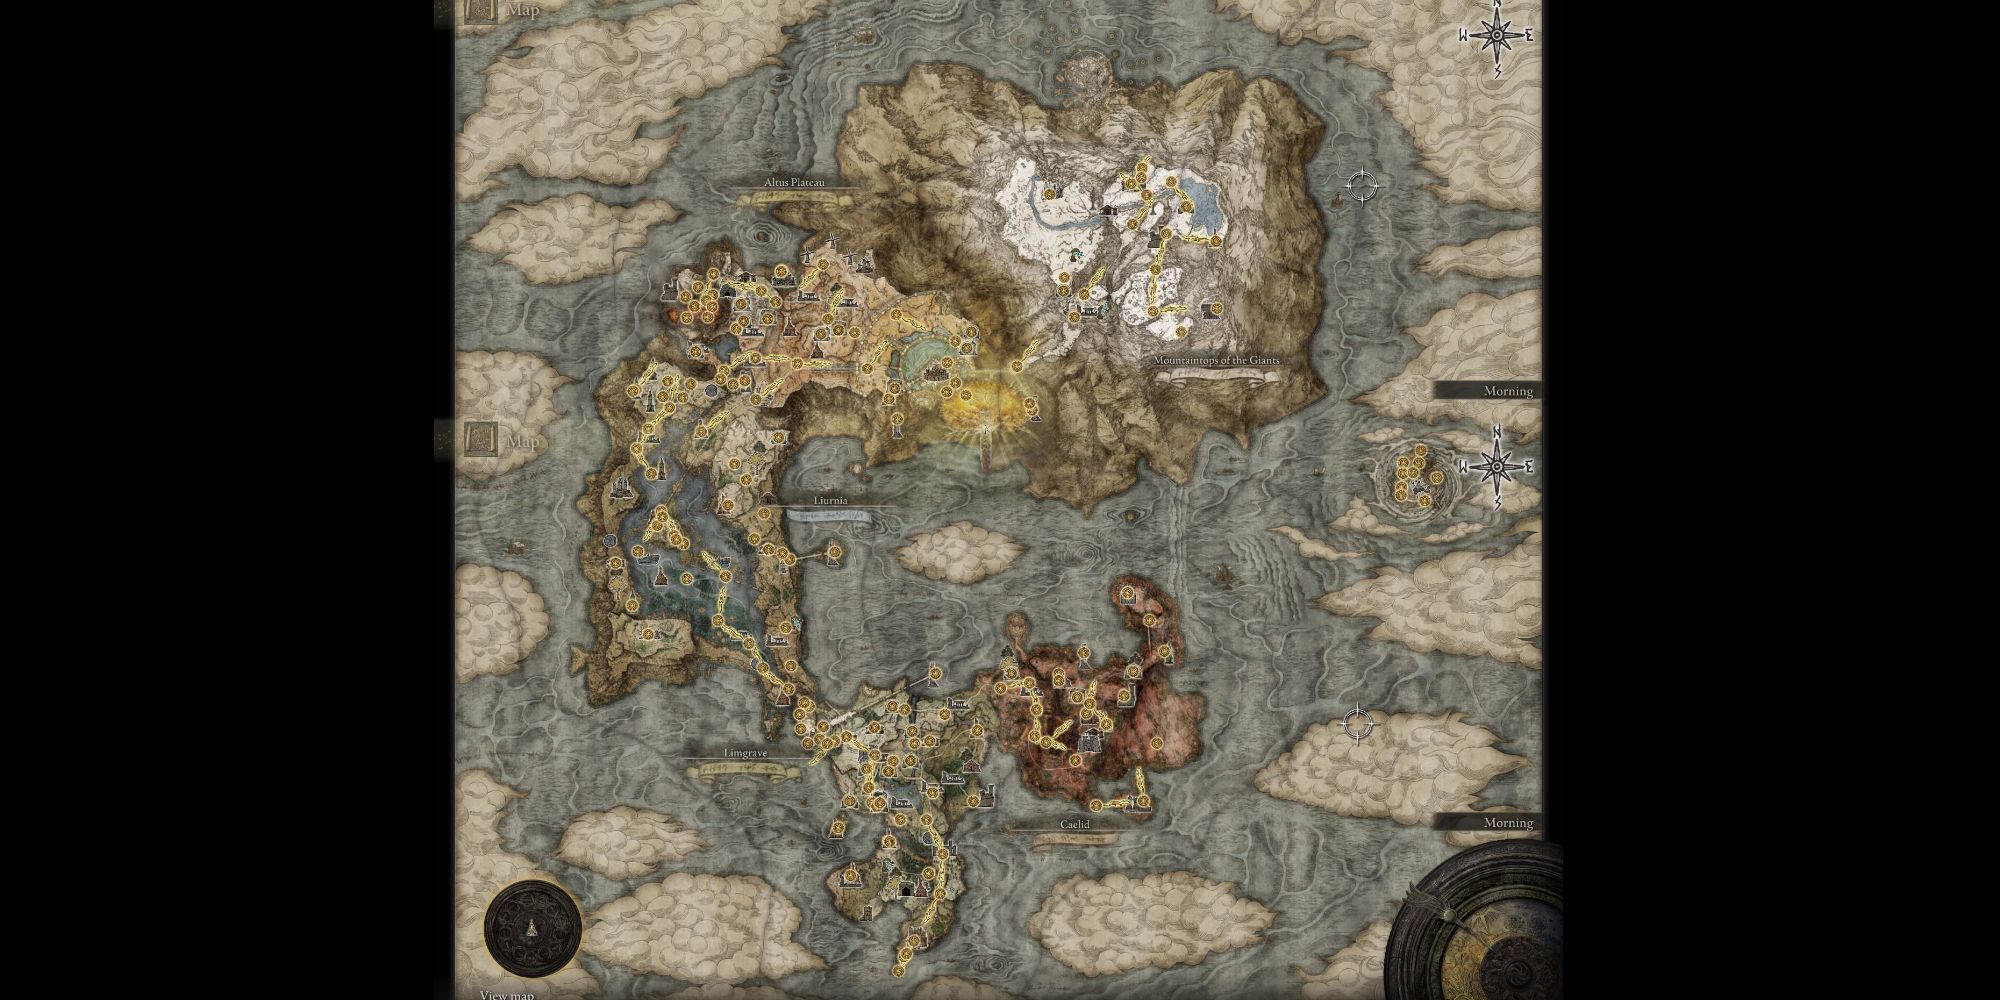 Elden Ring has a massive open-world map